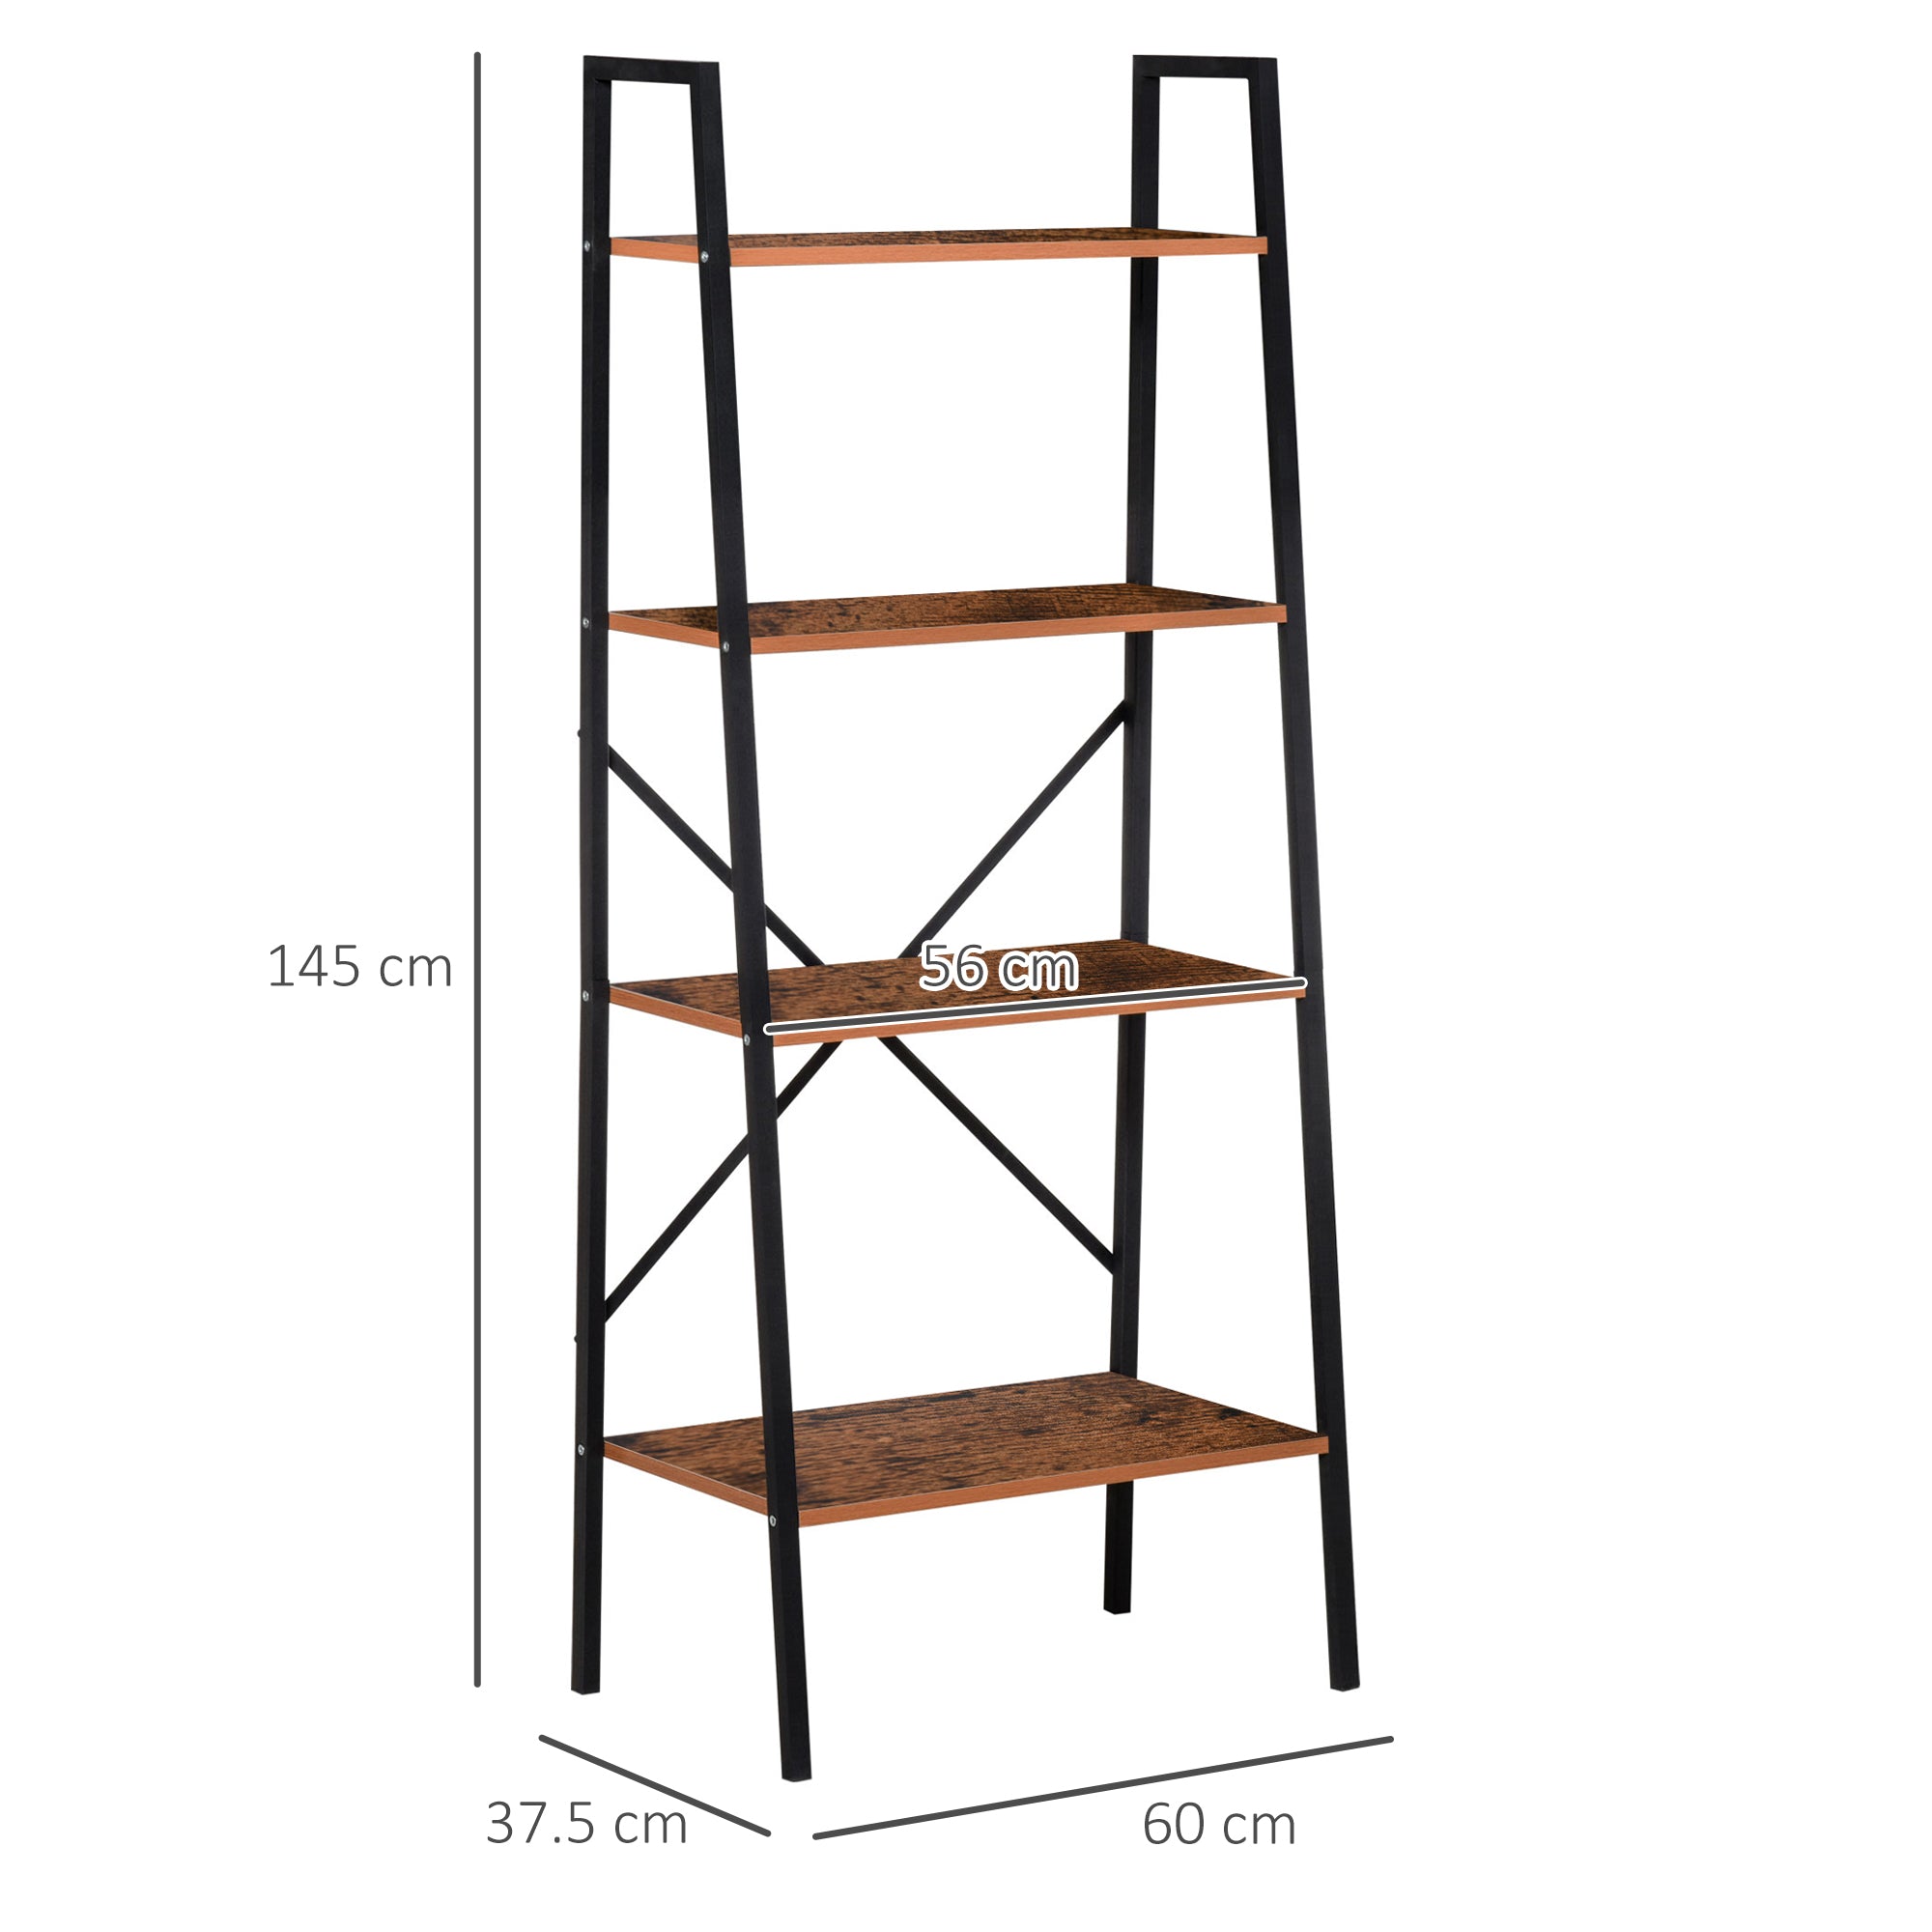 HOMCOM 4-Tier Vintage Ladder Shelf Bookcase Wood Storage Rack Stand Plants Display Black brown - Inspirely